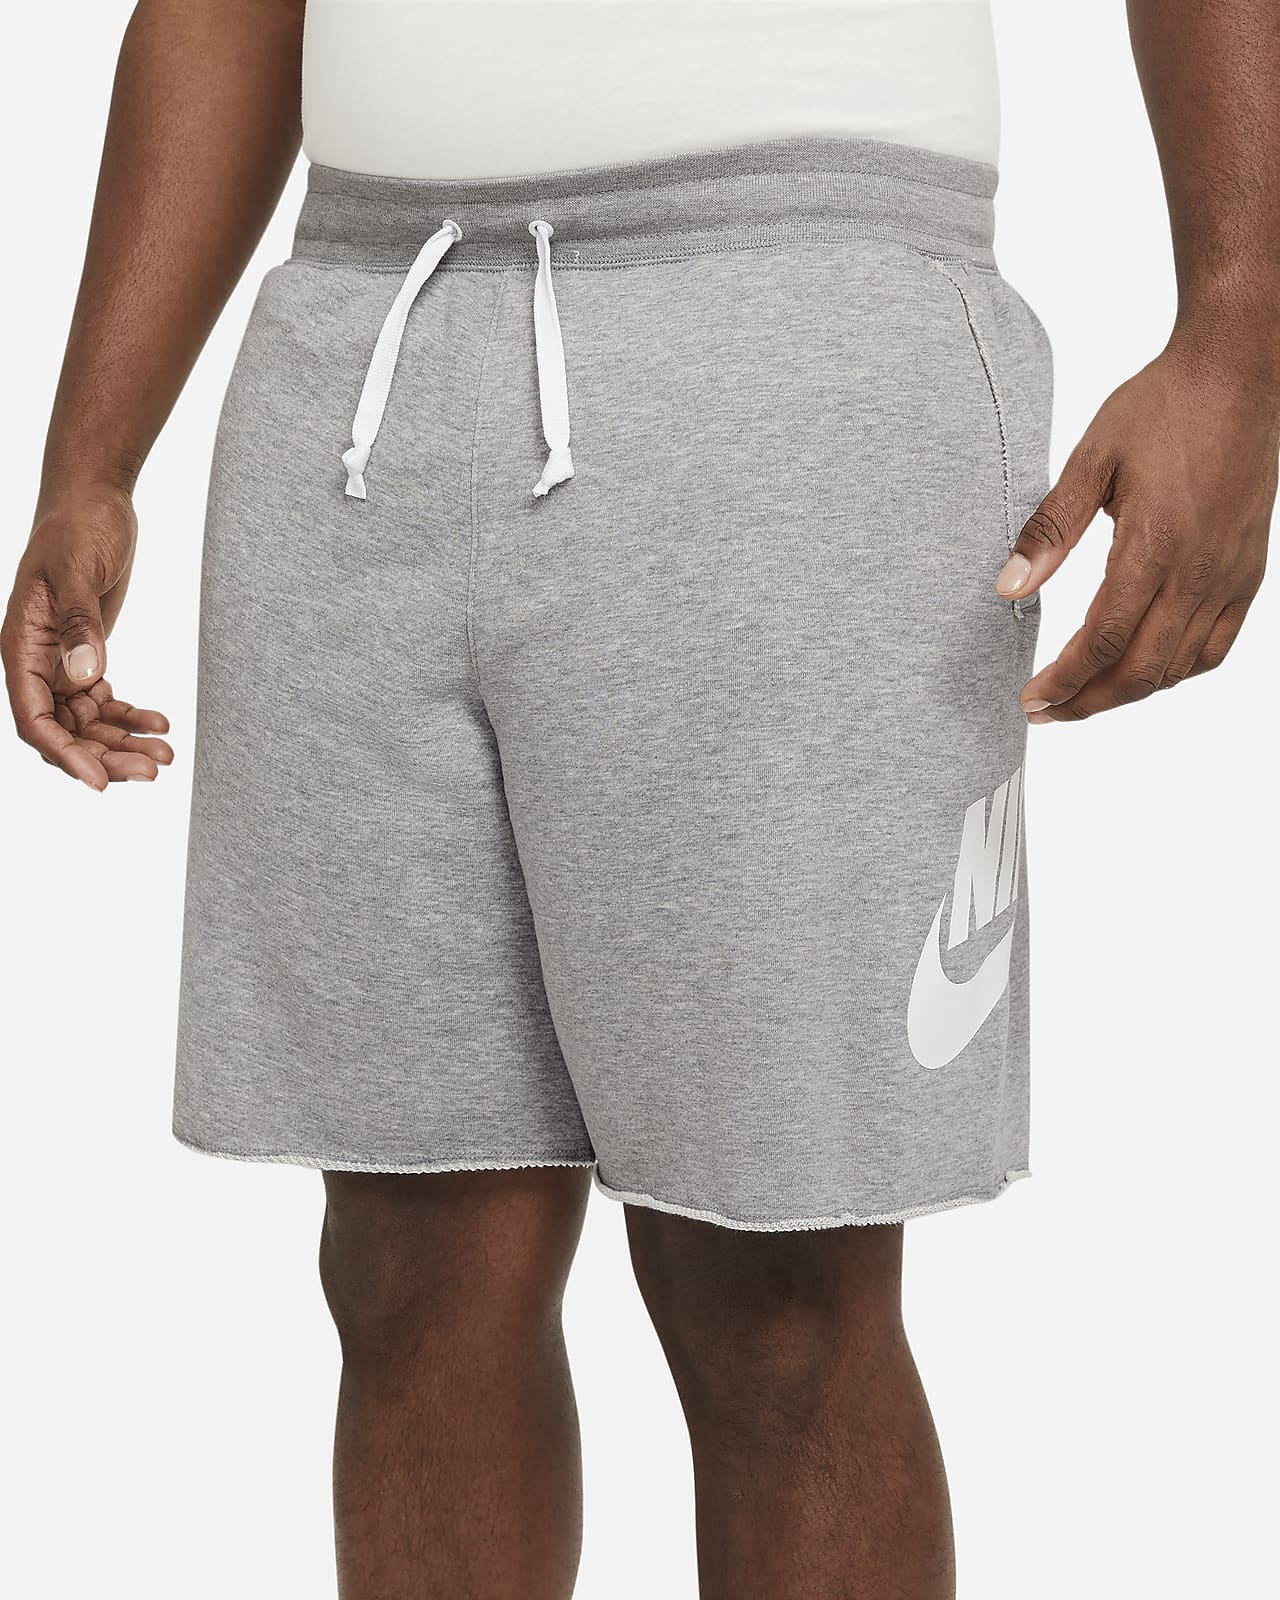 grey nike sweatpants shorts